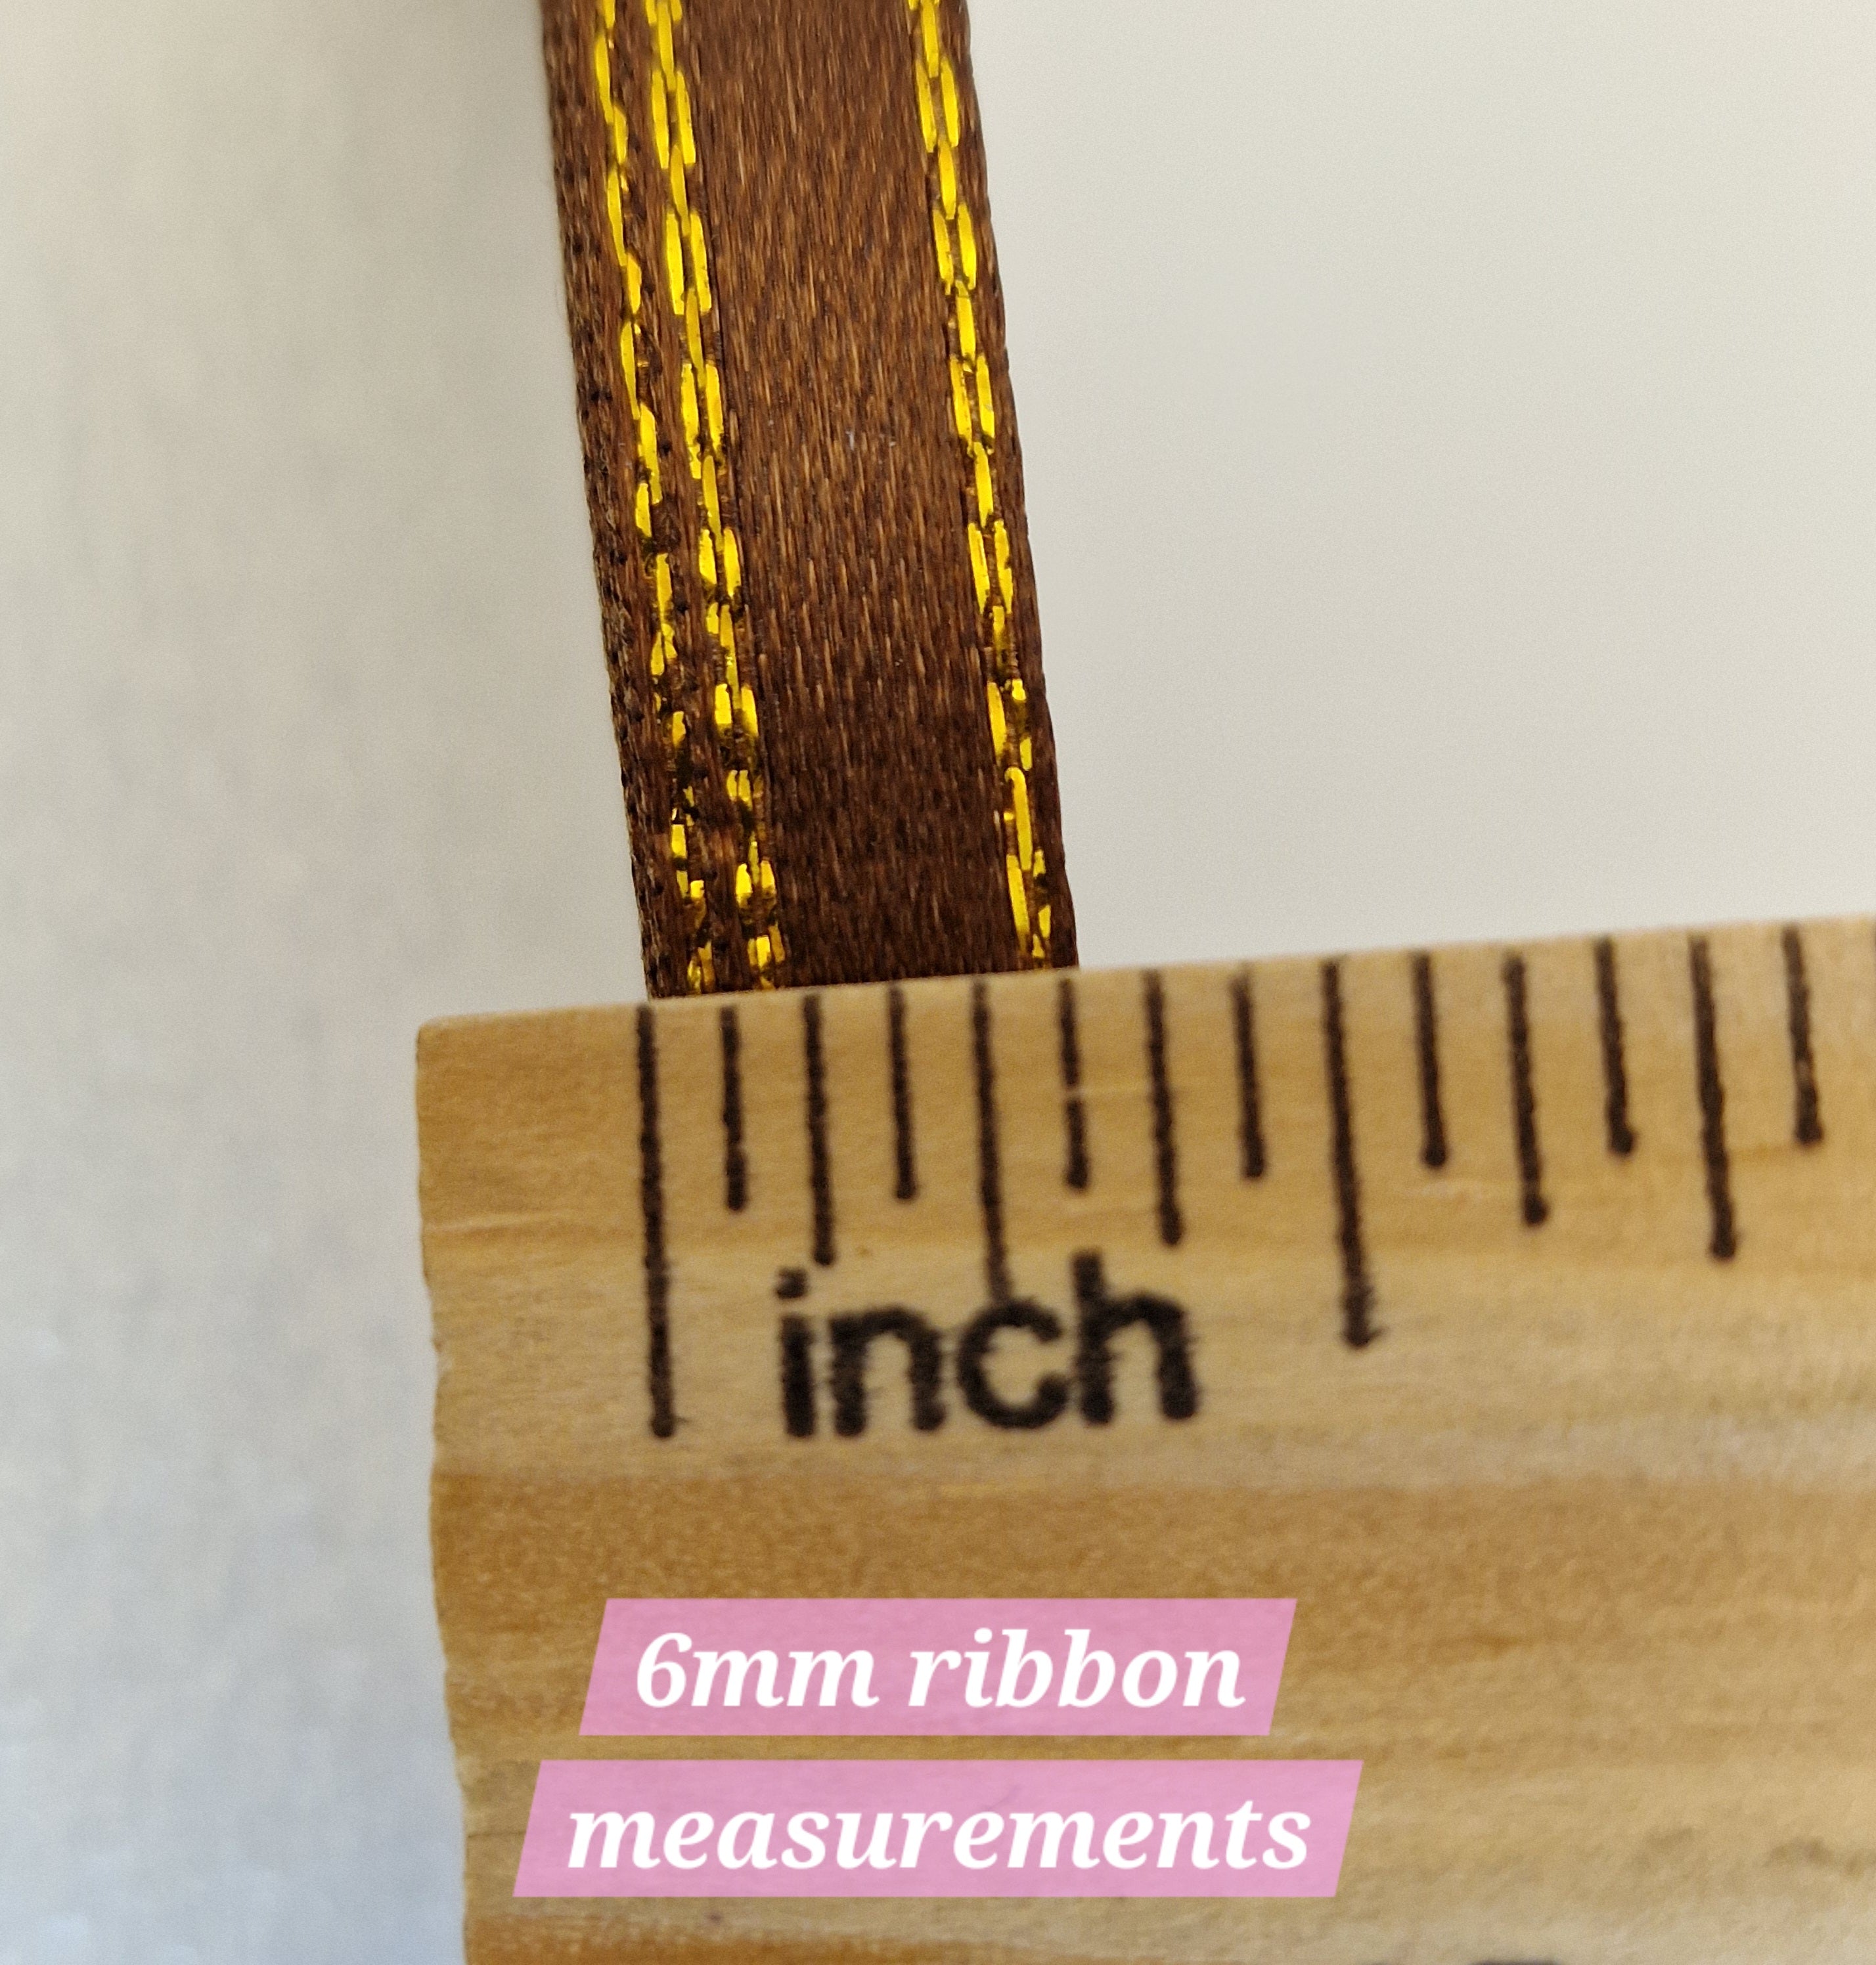 MajorCrafts 6mm 22metres Black with Gold Edge Trim Satin Fabric Ribbon Roll